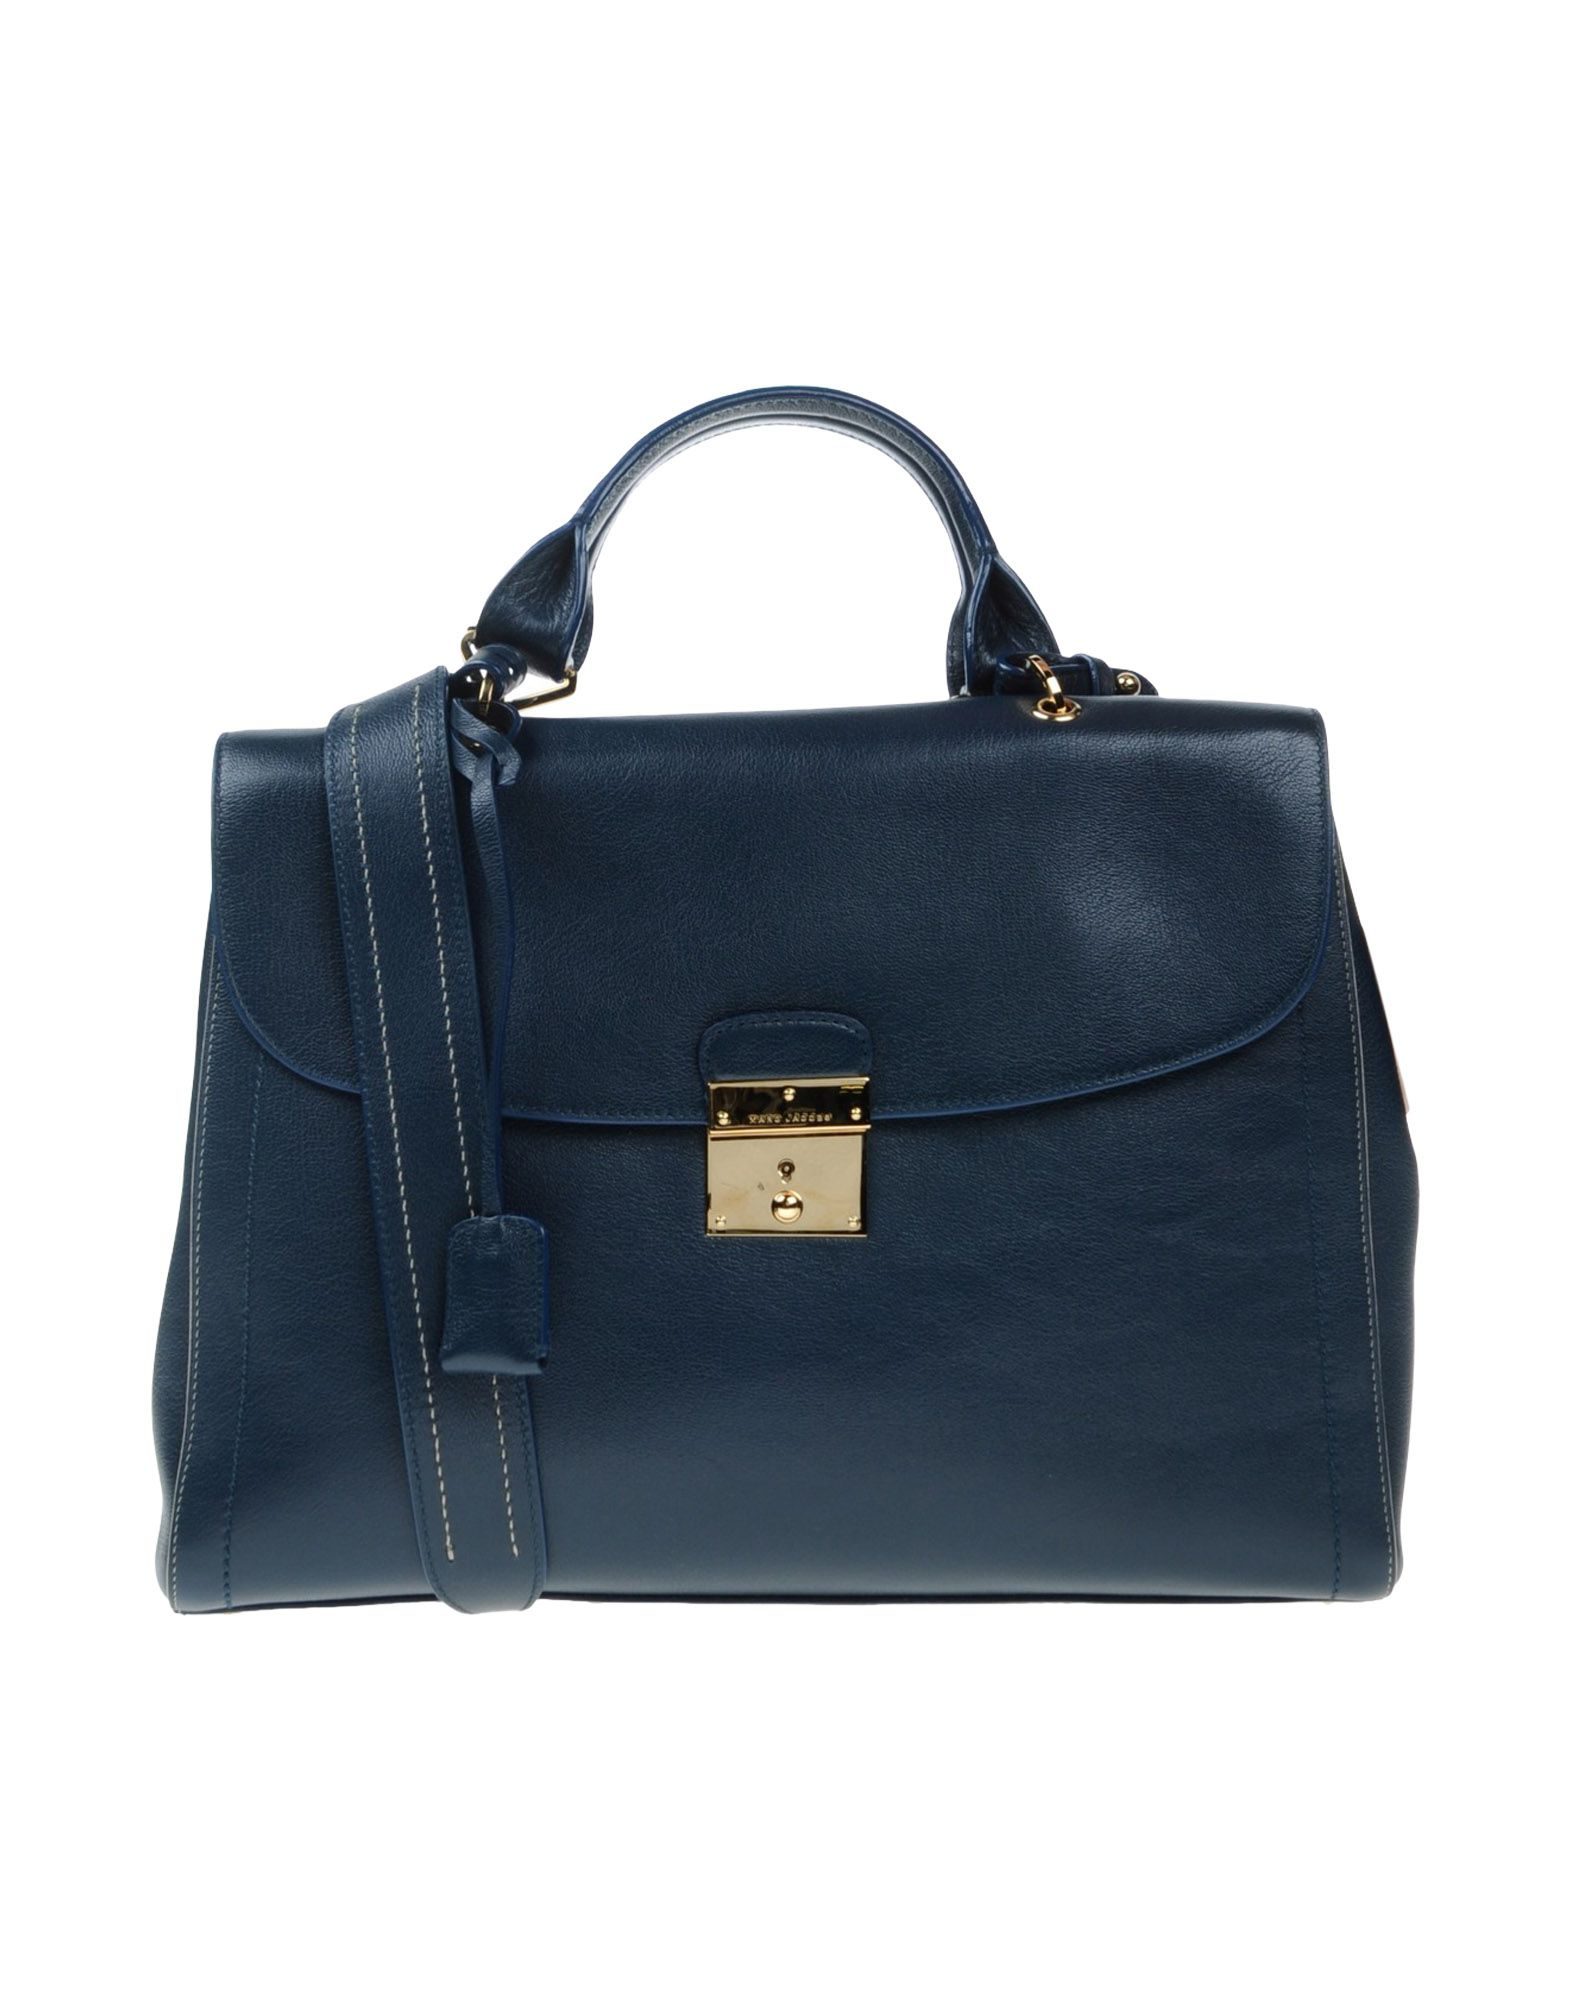 Lyst - Marc jacobs Handbag in Blue